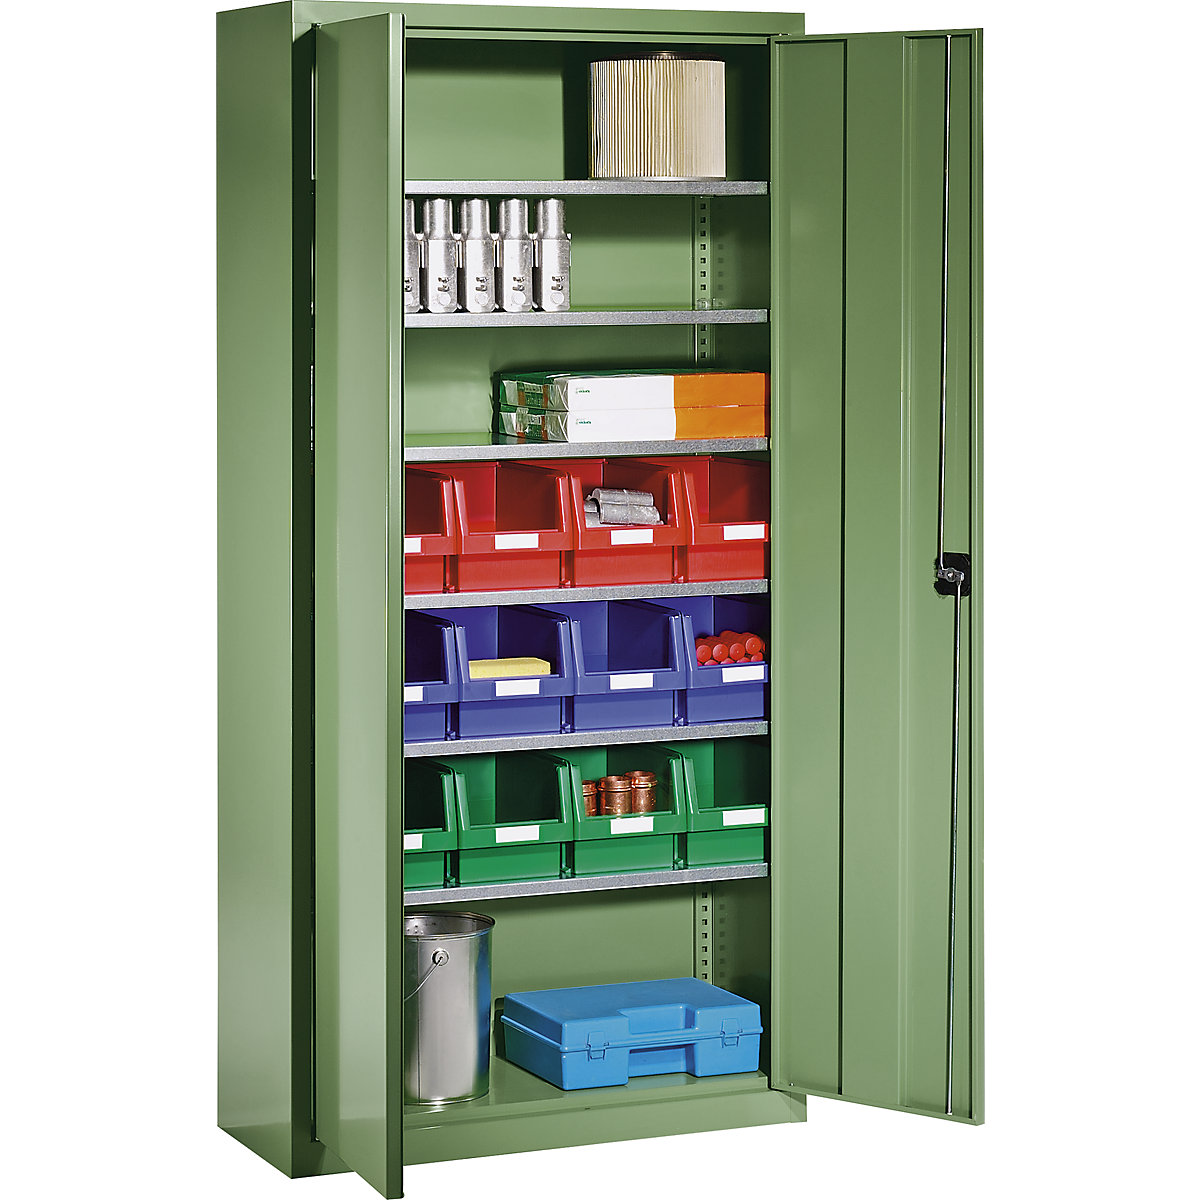 Storage cupboard made of sheet steel – eurokraft pro, with 12 open fronted storage bins, reseda green RAL 6011-2